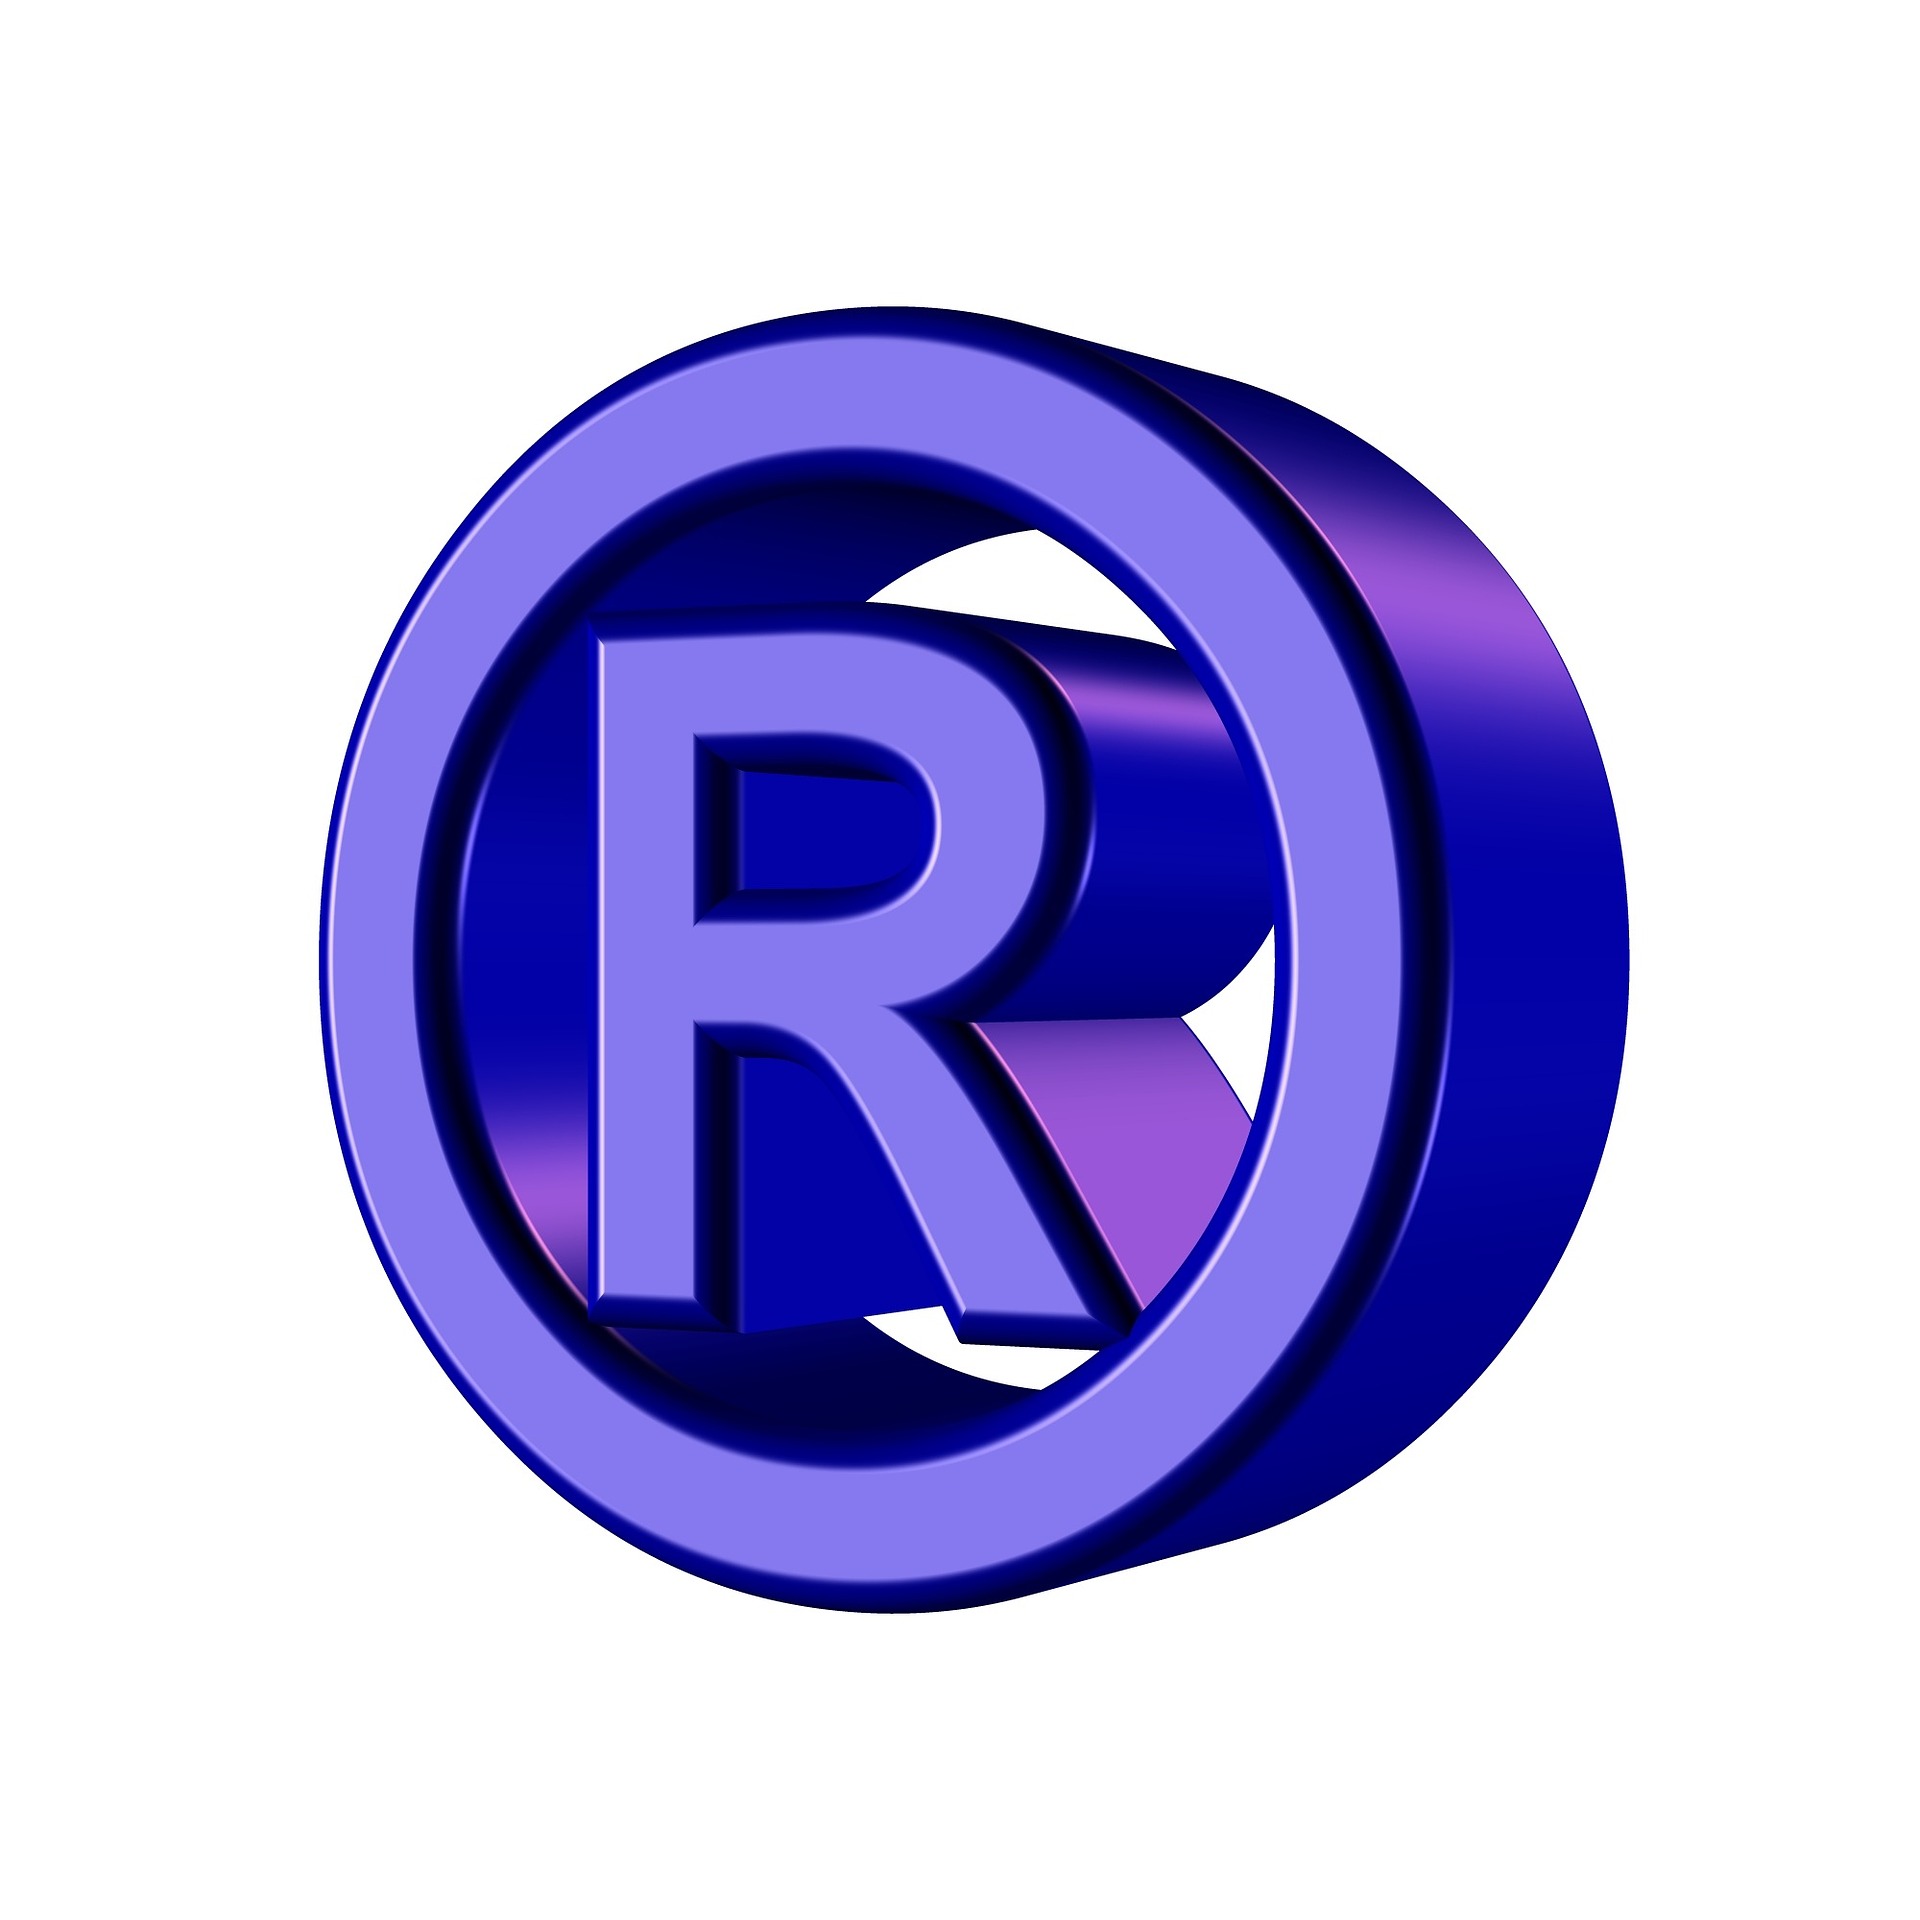 A purple "registered trademark" symbol